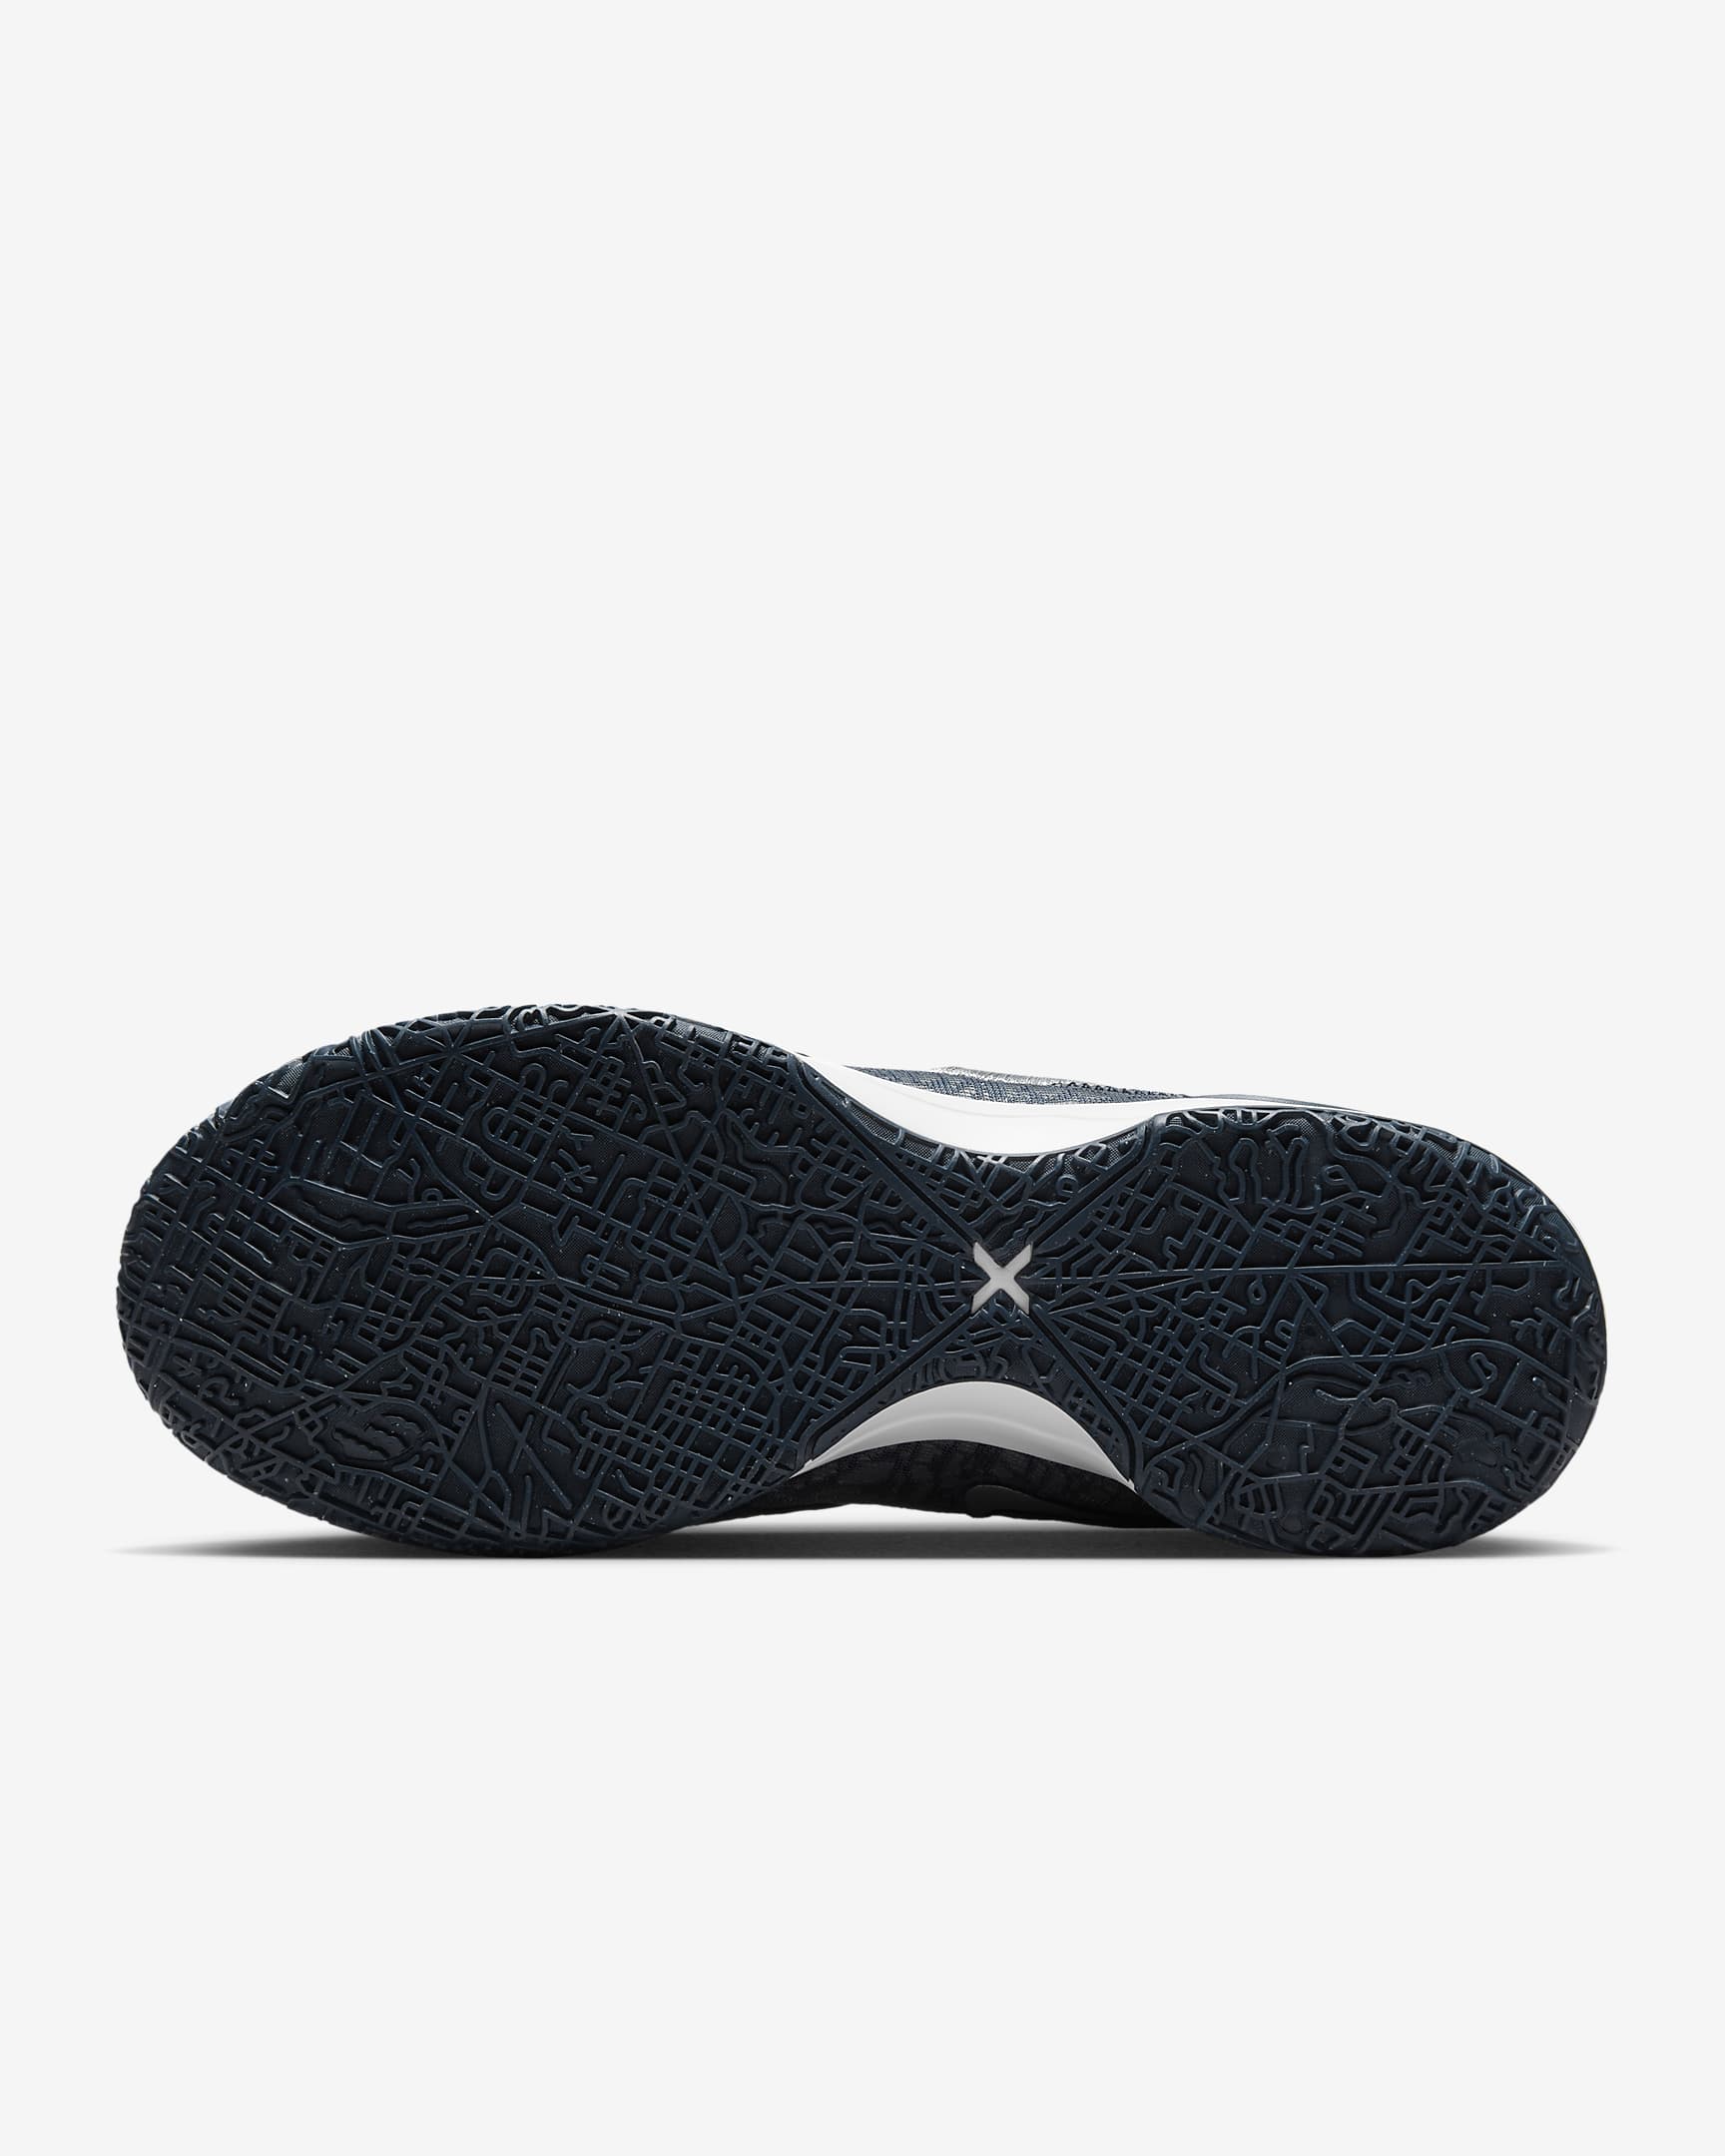 LeBron NXXT Gen AMPD Basketball Shoes - Armoury Navy/Sail/Metallic Silver/Light Silver